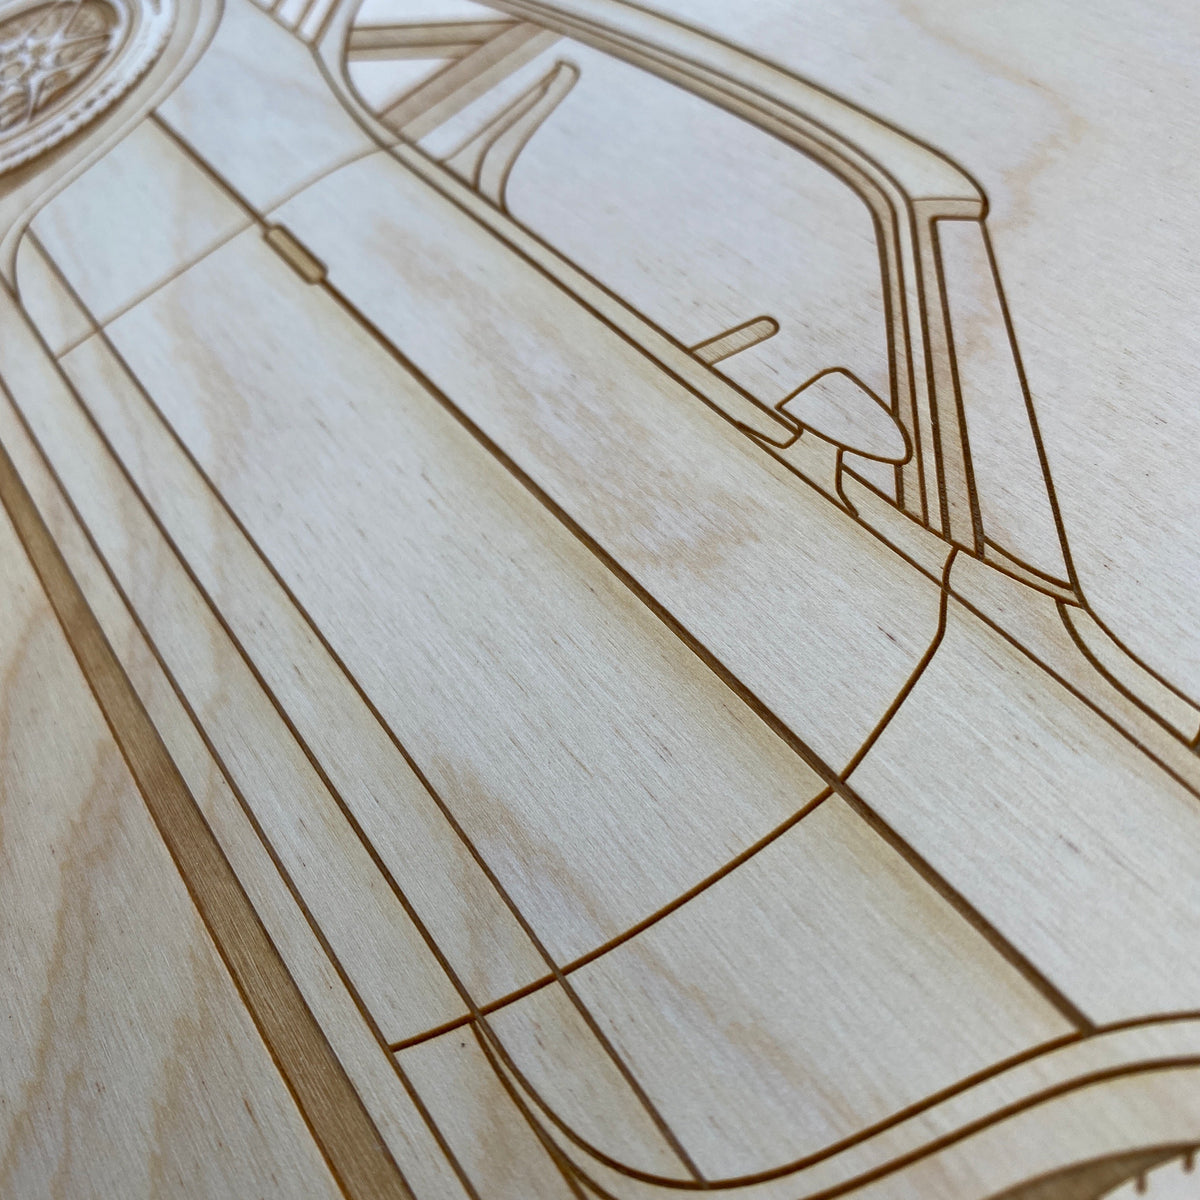 Ford Torino Hotrod Framed Wood Engraved Artwork